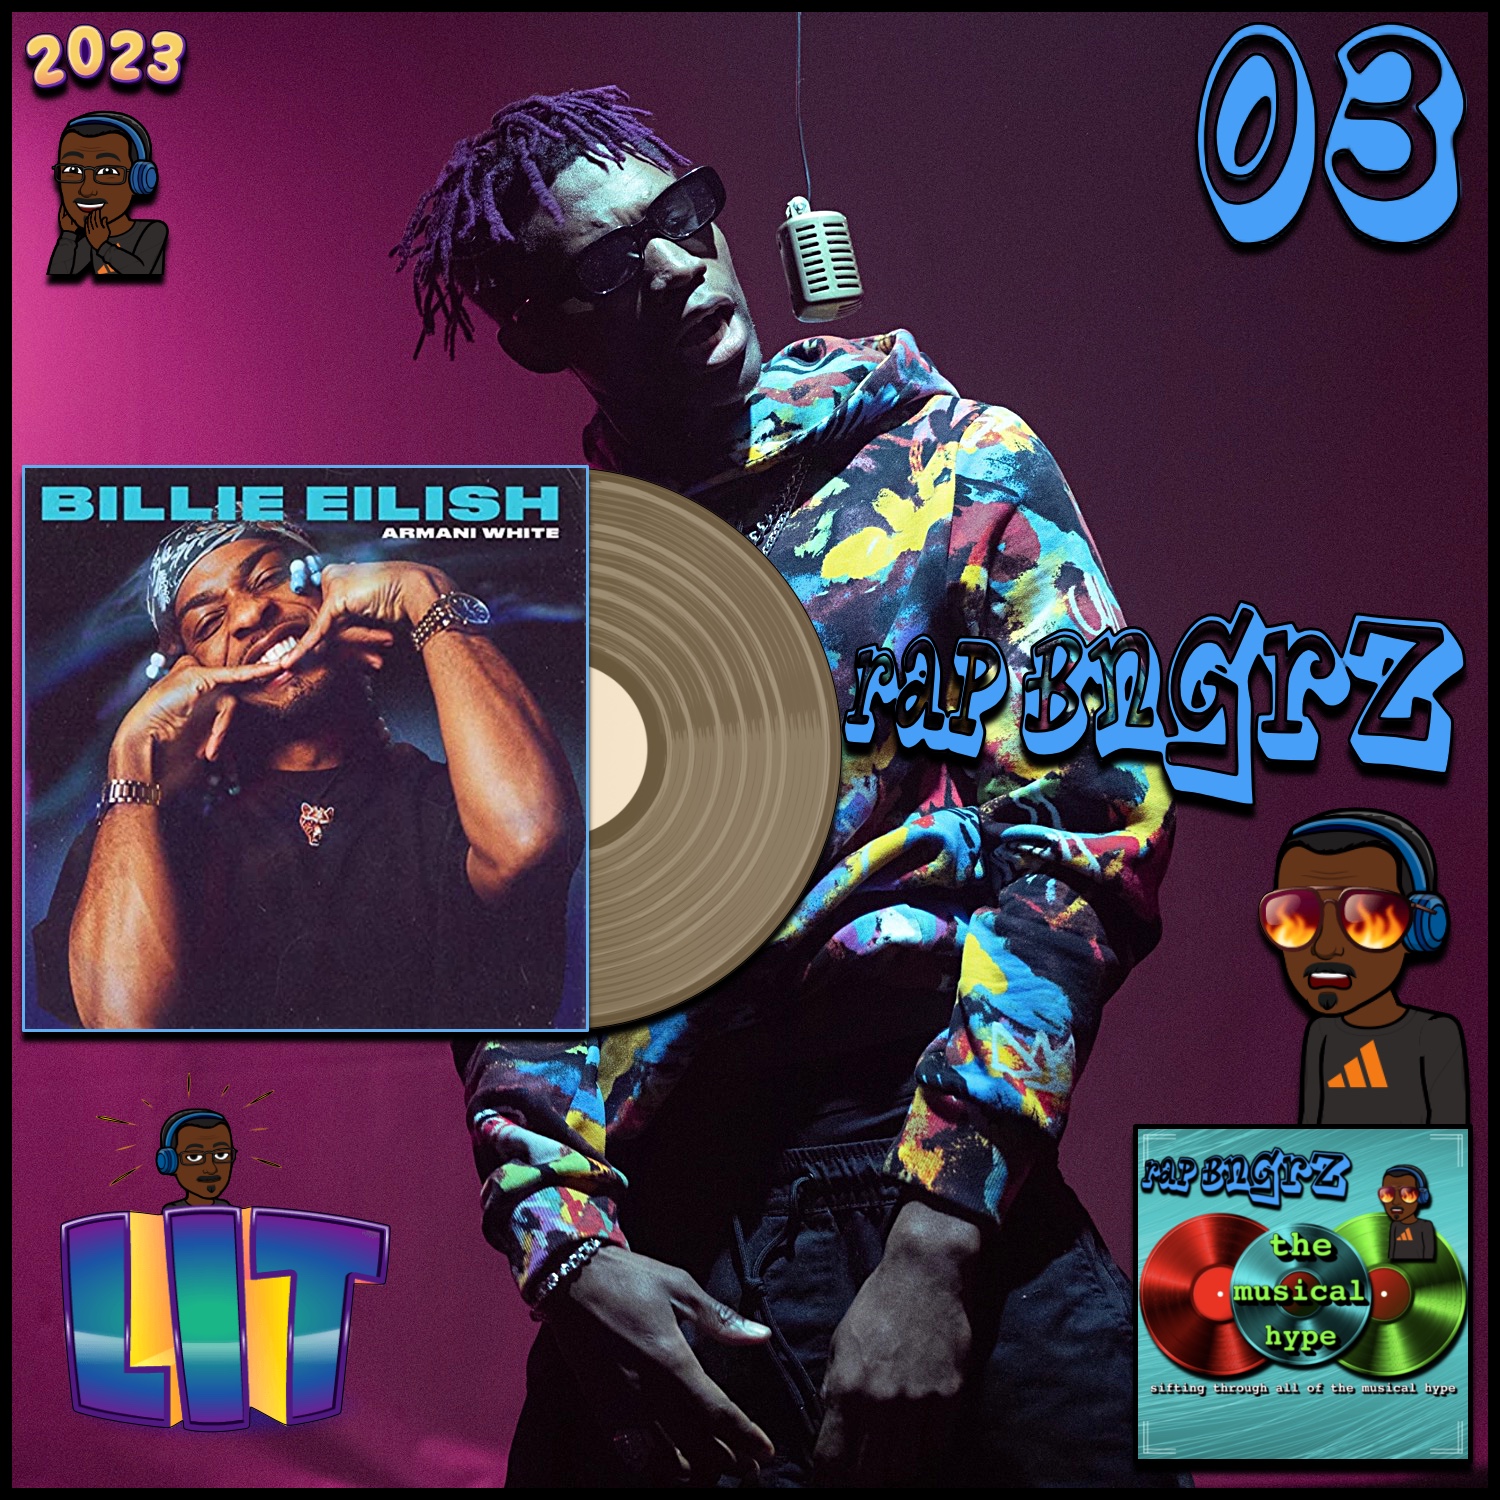 Armani White, BILLIE EILISH. | Rap BNGRZ